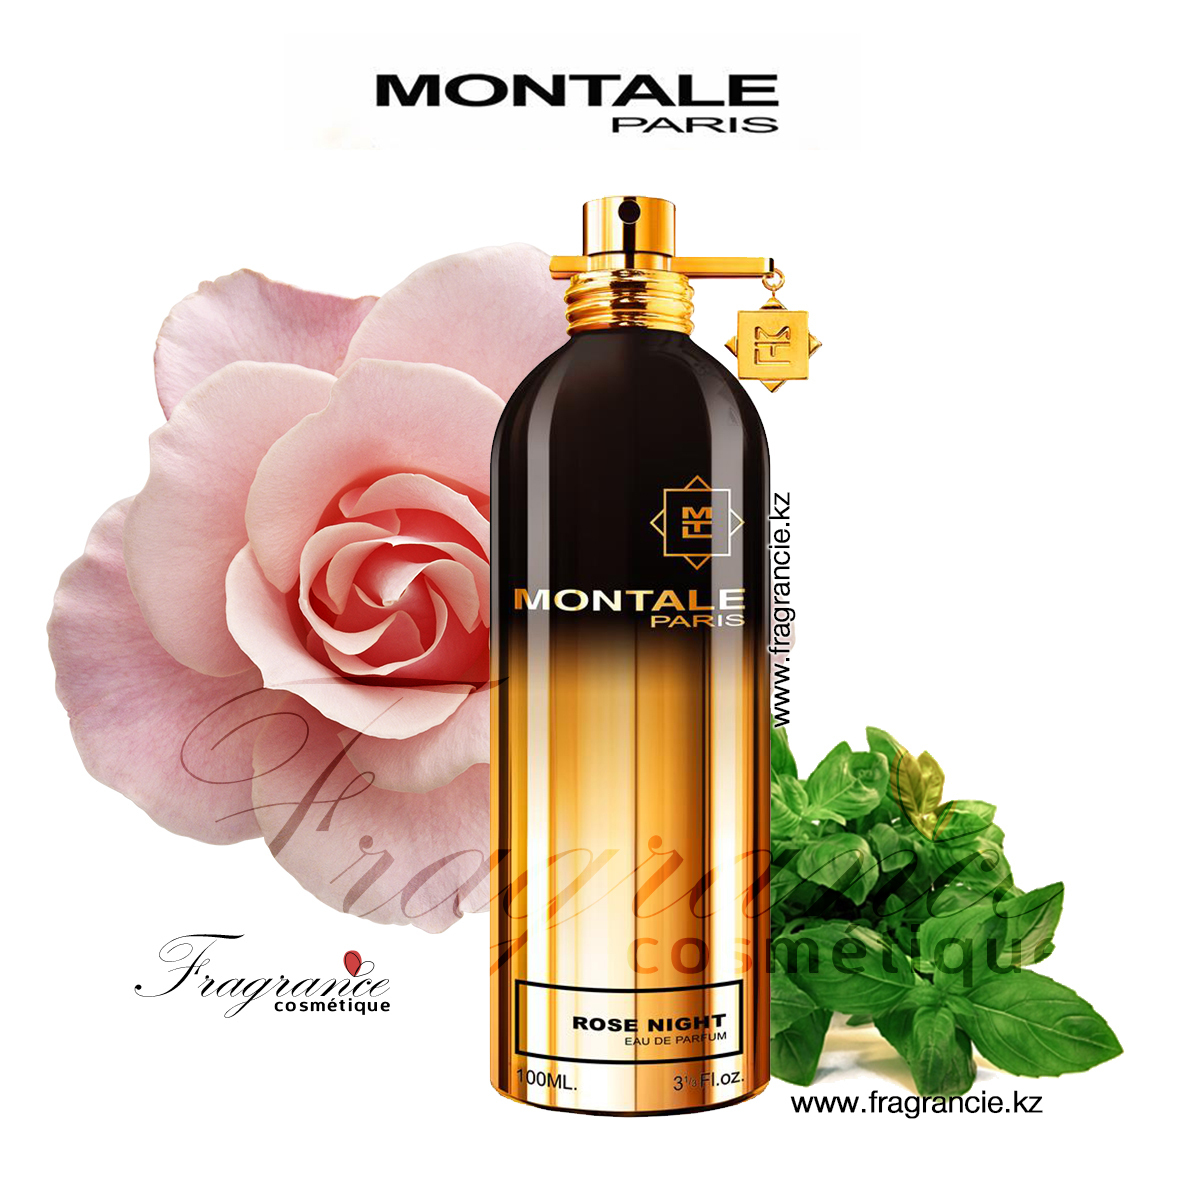 Montale basilic. Montale Rose Night, 100 ml. Montale Rose Night 100 Eau de Parfum. Montale духи Rose Night. Montale Rose Night 50 ml.